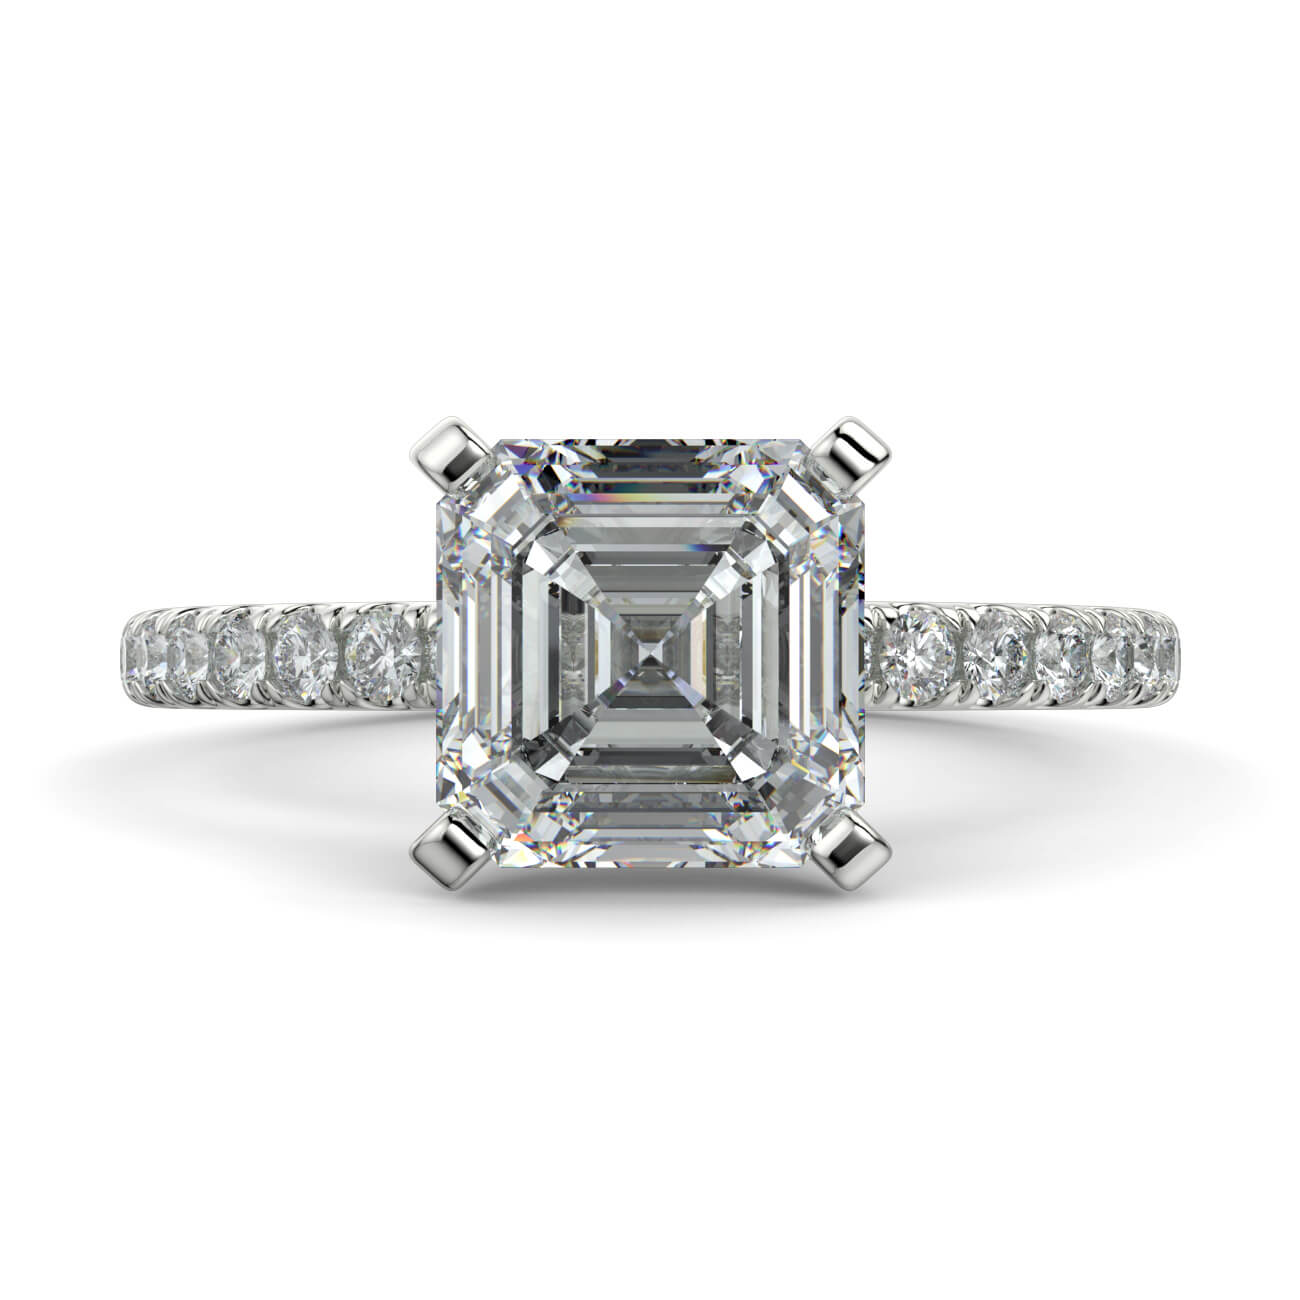 Delicate ‘Liat’ Asscher Cut Diamond Engagement Ring in 18k White Gold – Australian Diamond Network